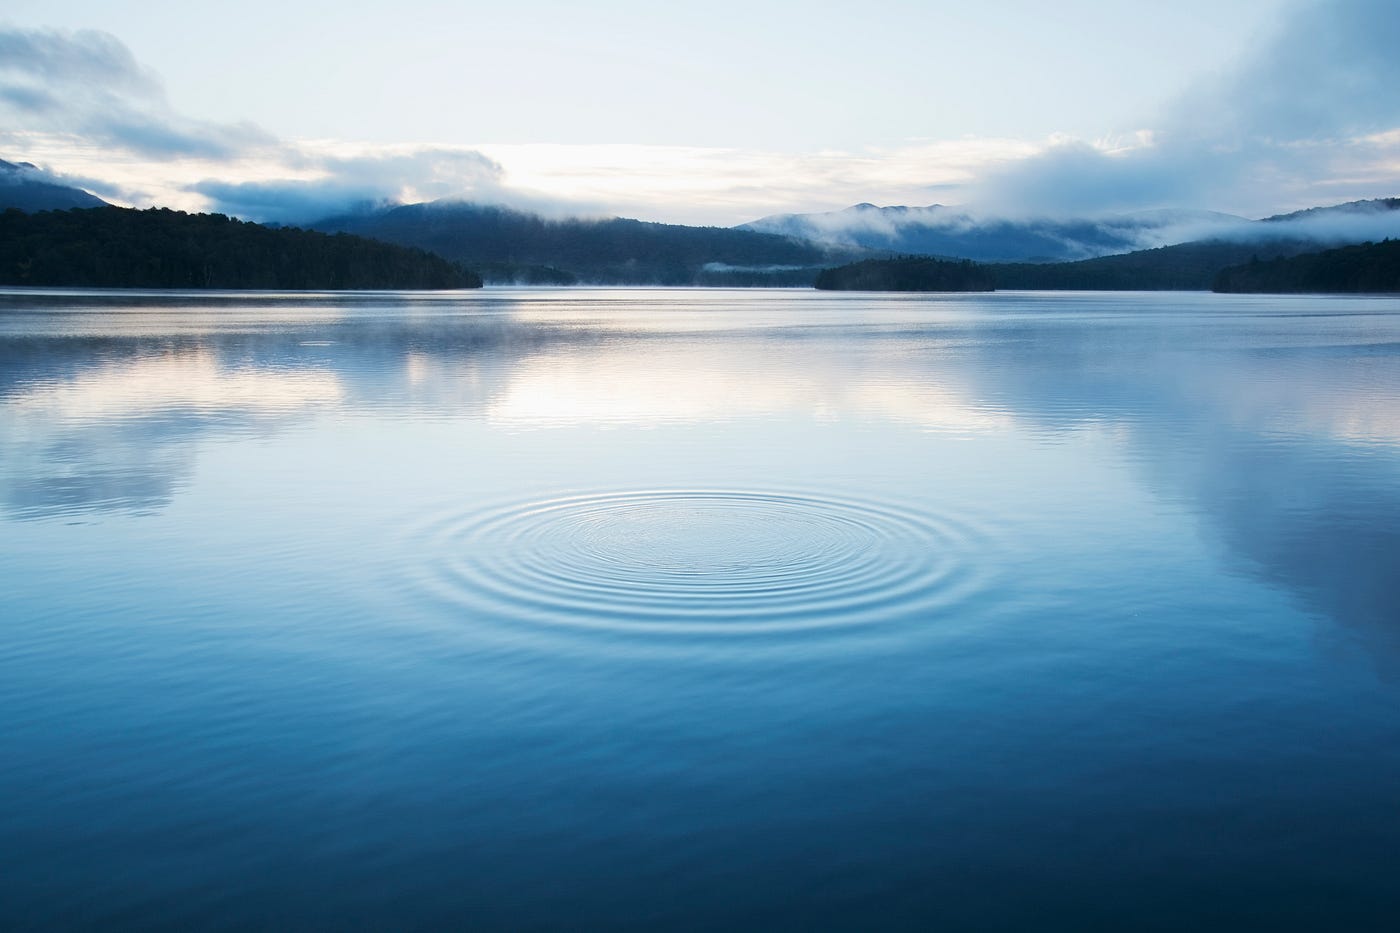 A singular circular pattern ripples on a calm lake’s surface.